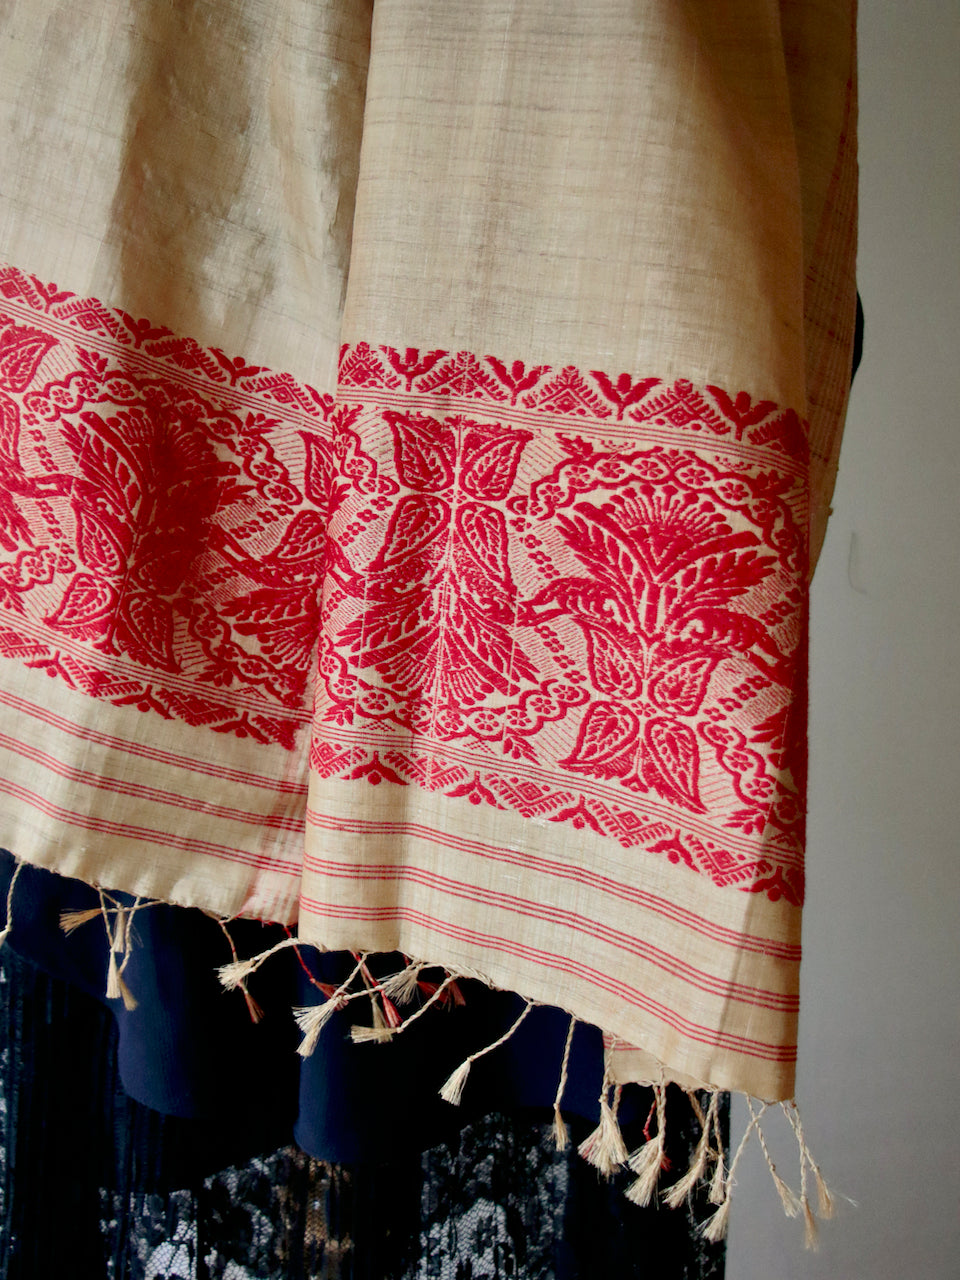 Handloom Traditional Muga Silk Shawl / Gamucha from Assam